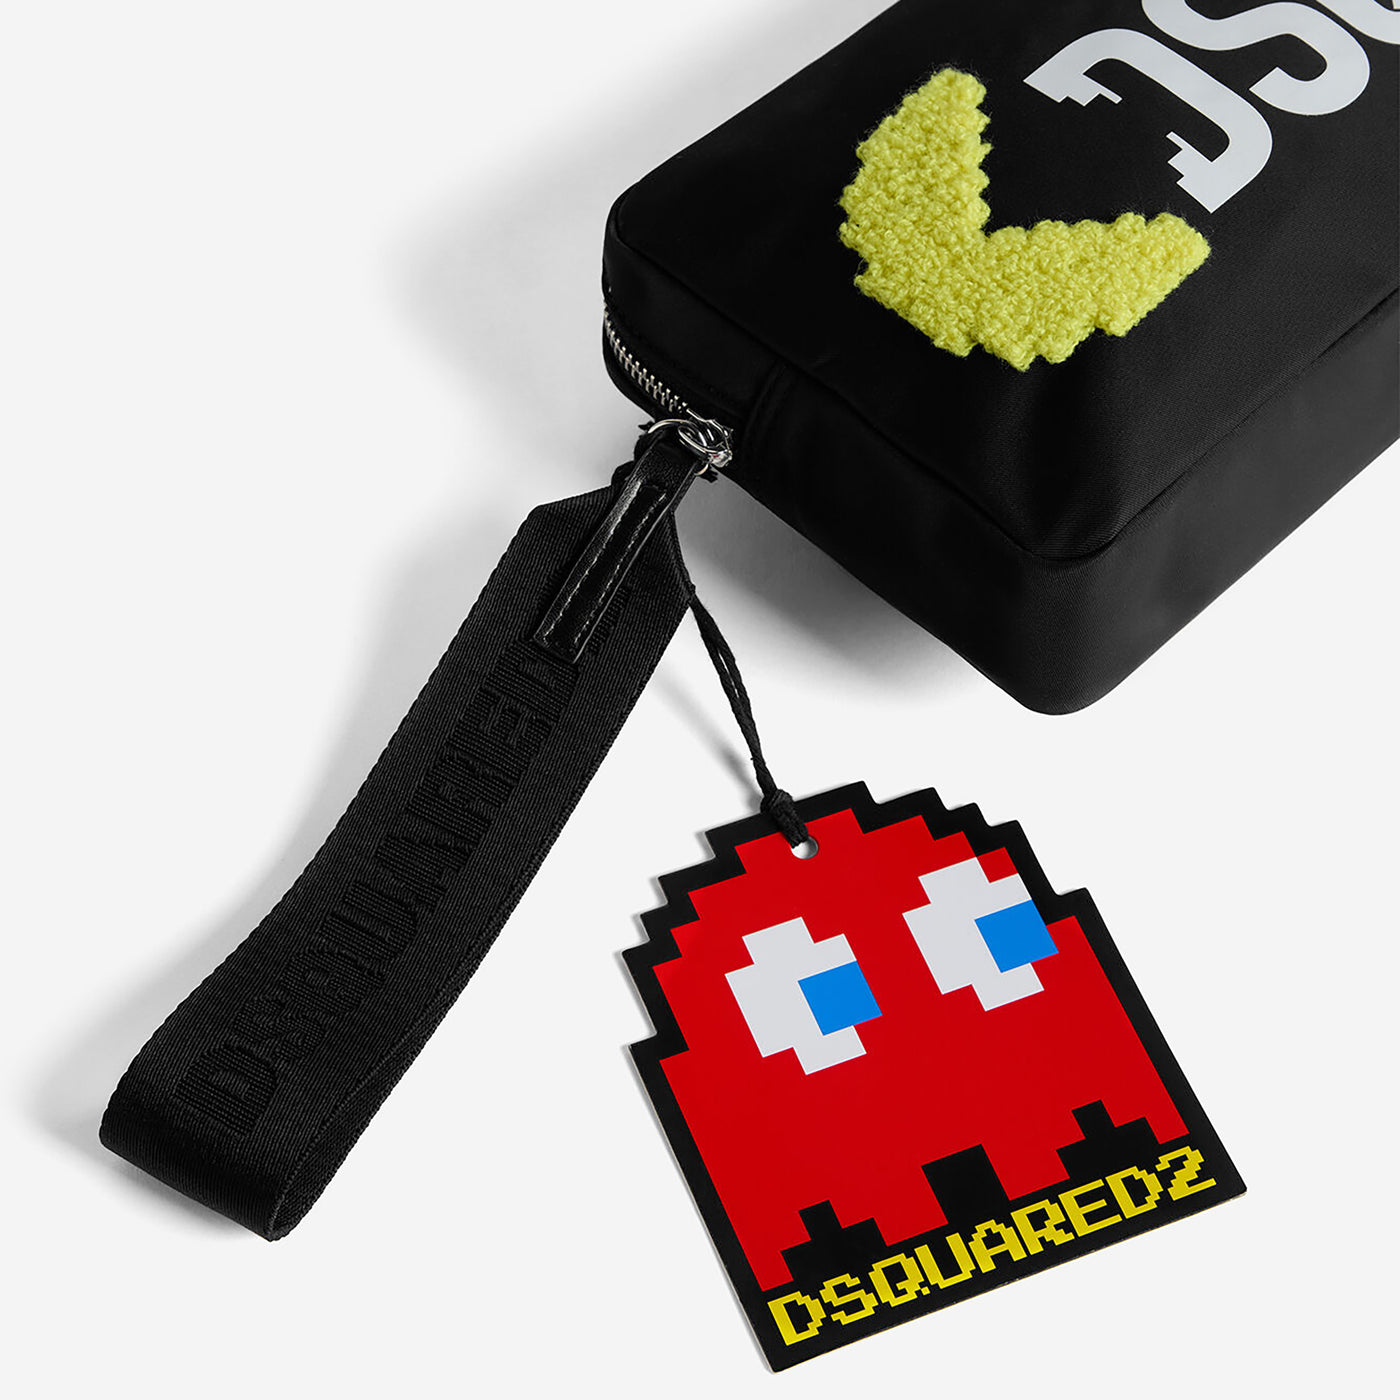 DSquared2 Pac-Man Clutch Bag